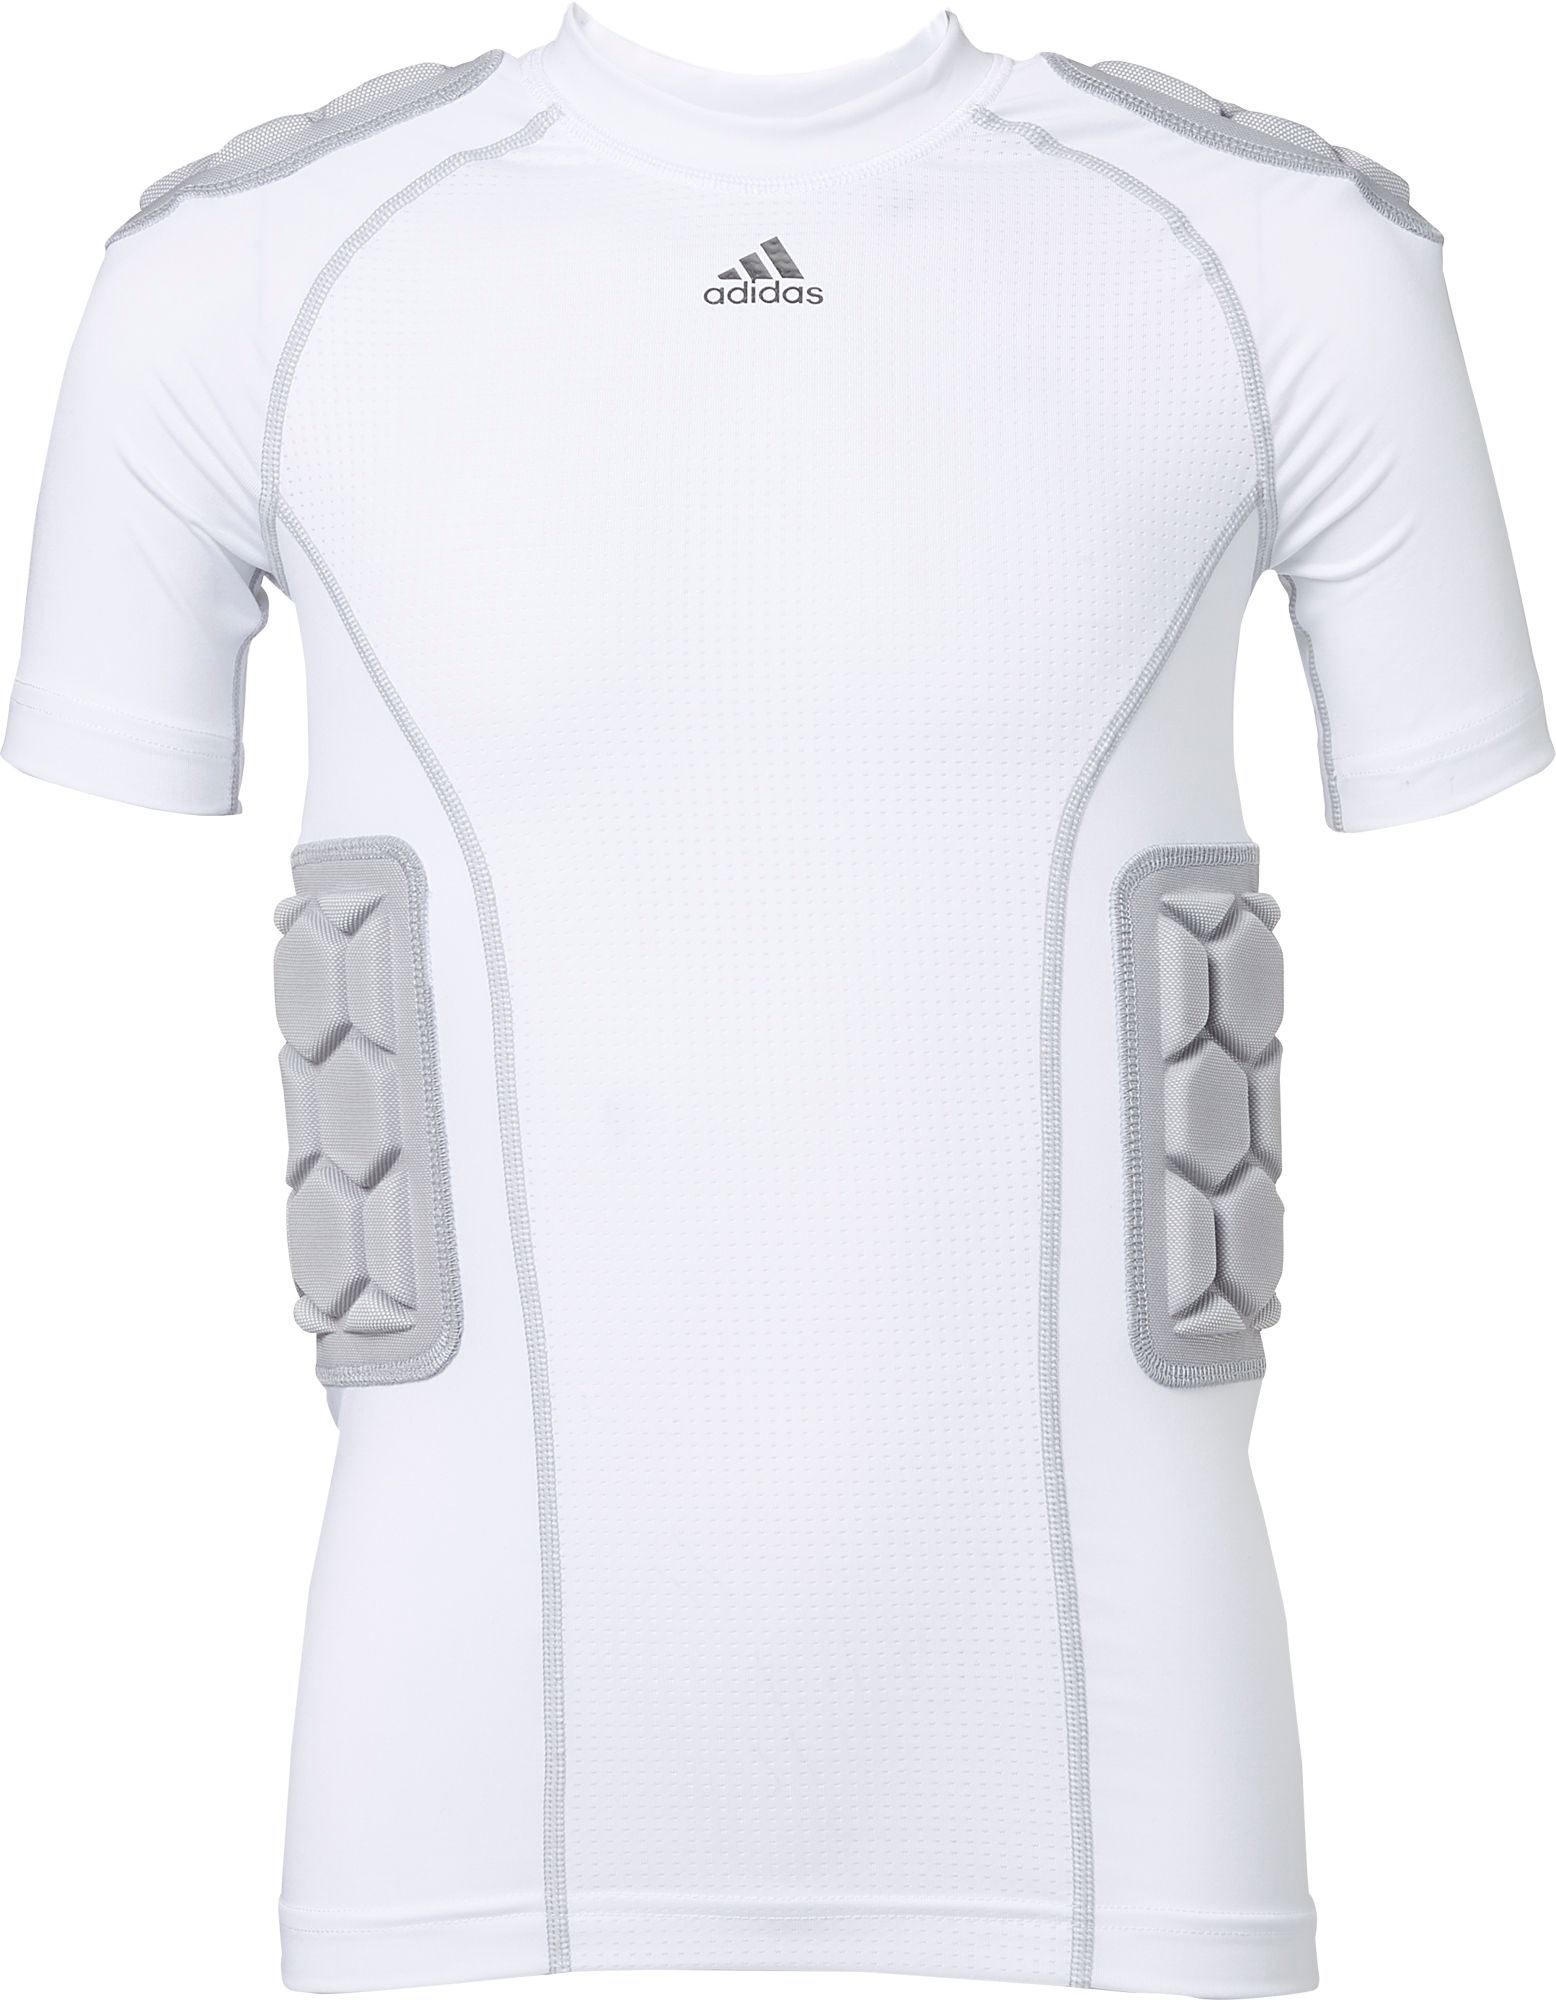 adidas football compression shirt